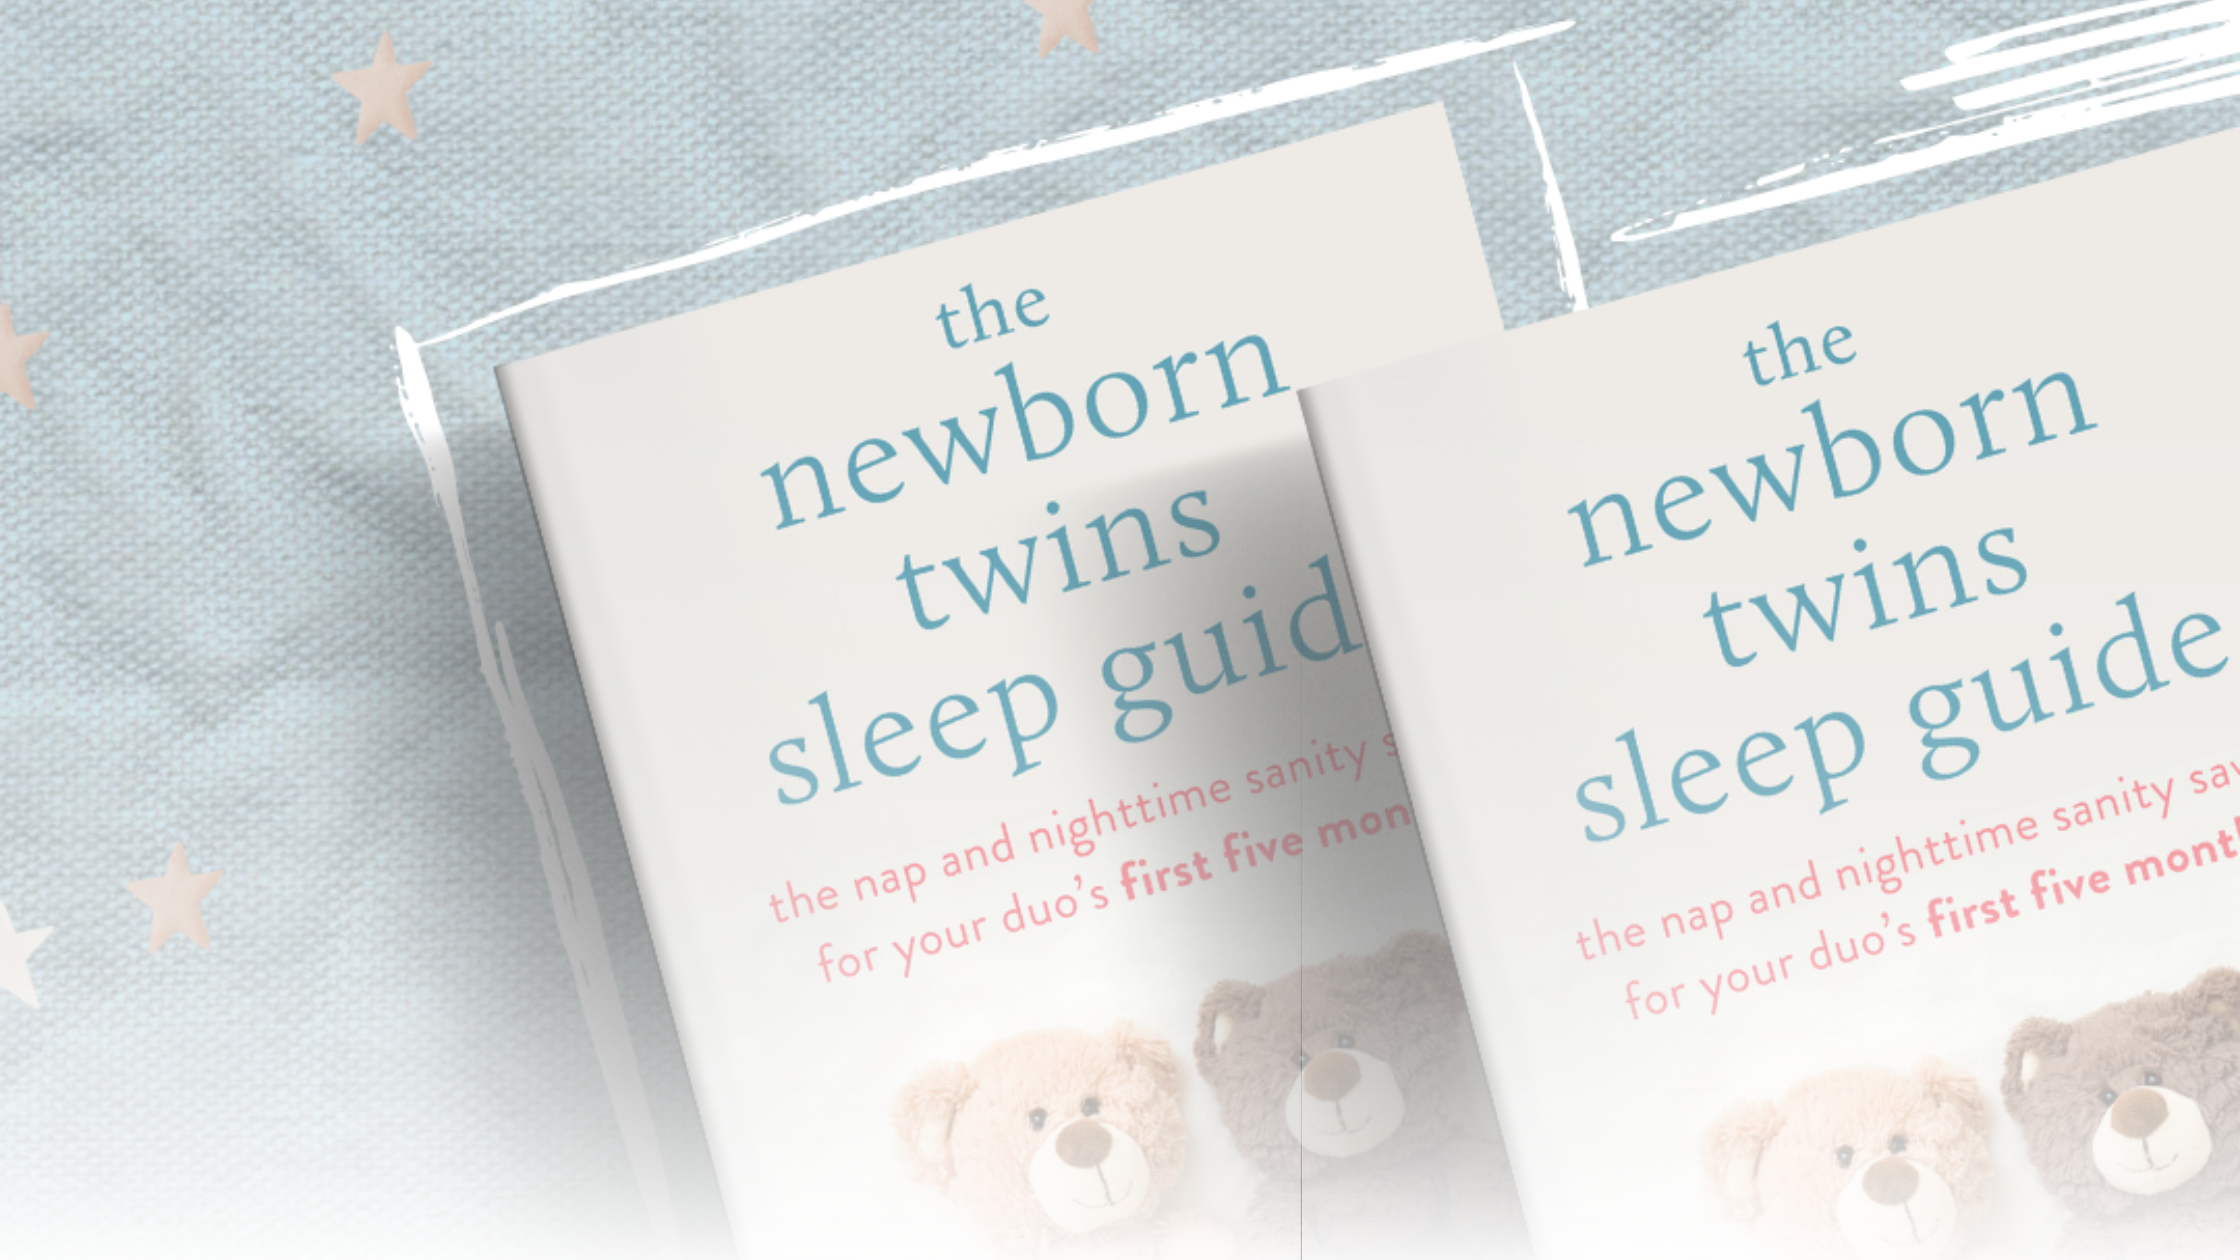 The Newborn Twins Sleep Guide Resource Page